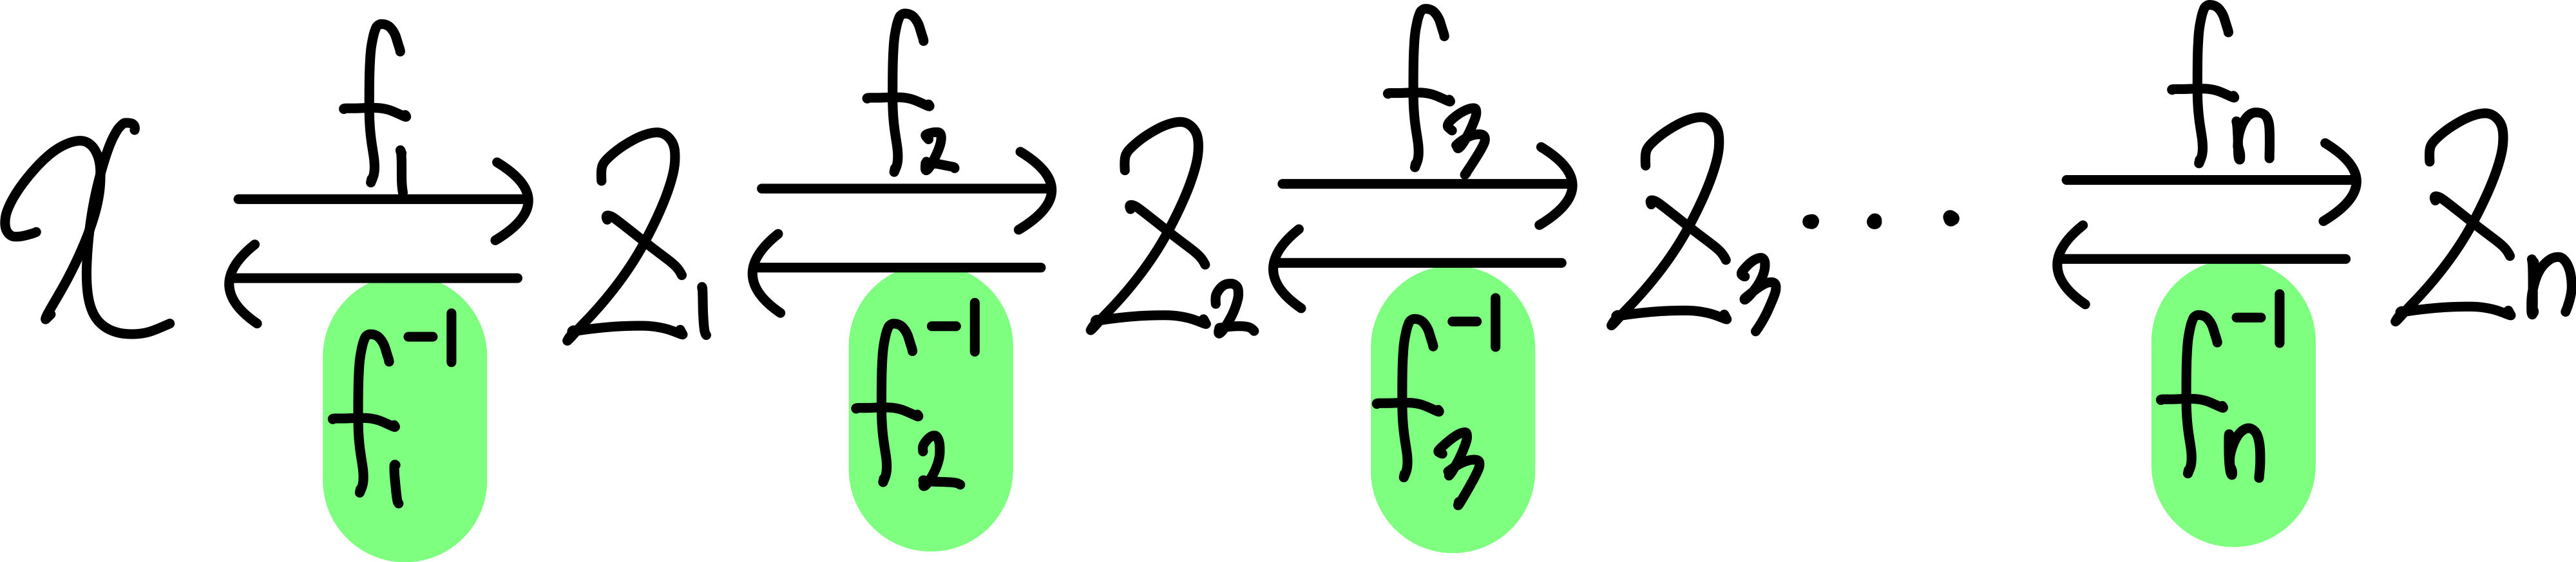 f와 f의 역함수로 연결된 x와 z들